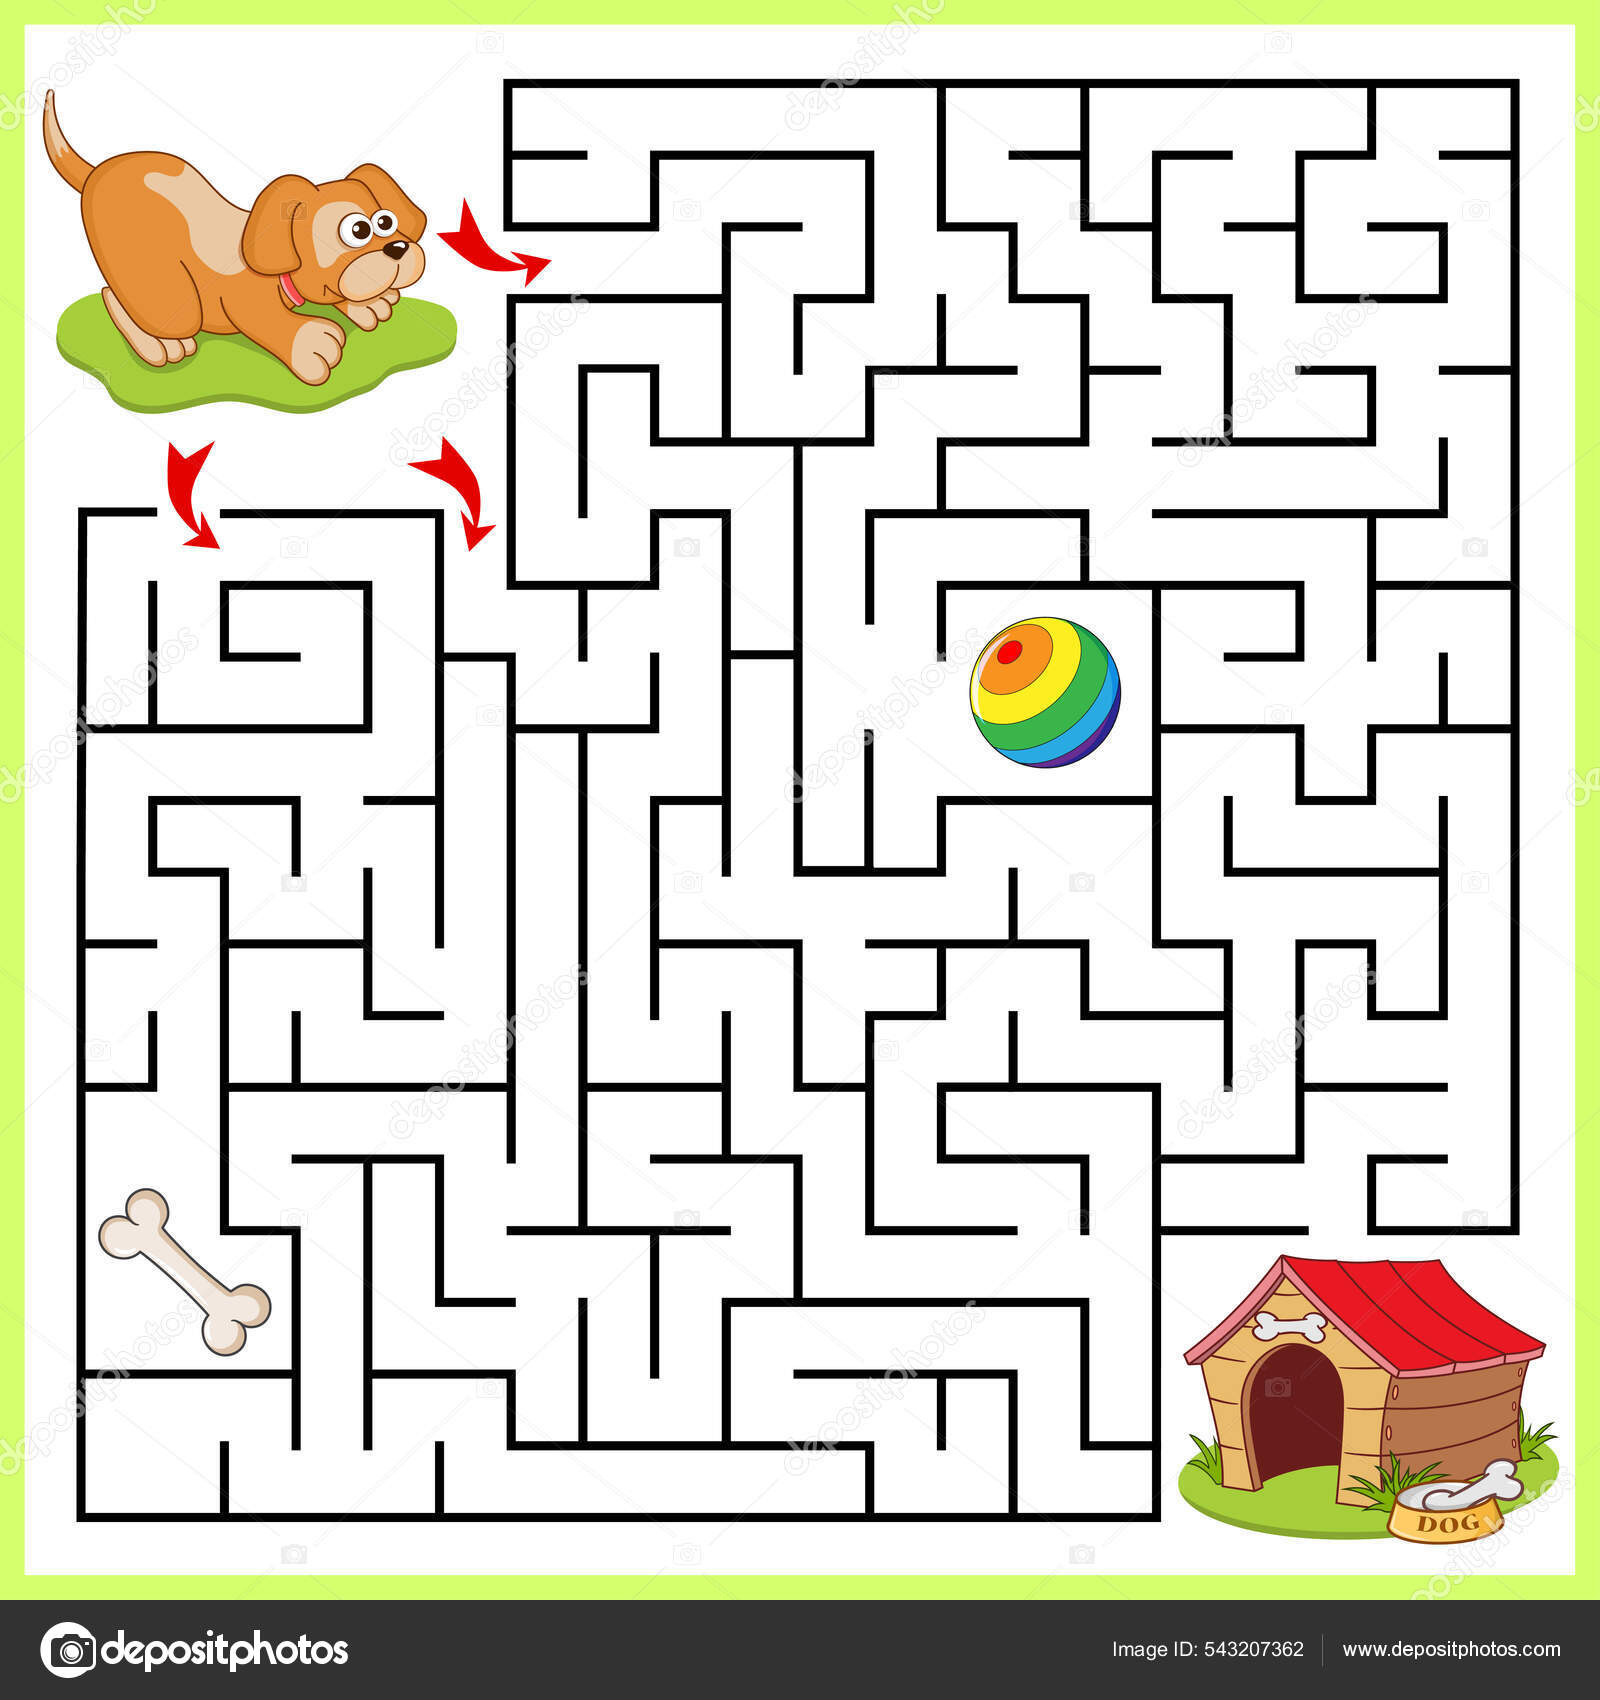 Dog Maze, Worksheet, Education.com